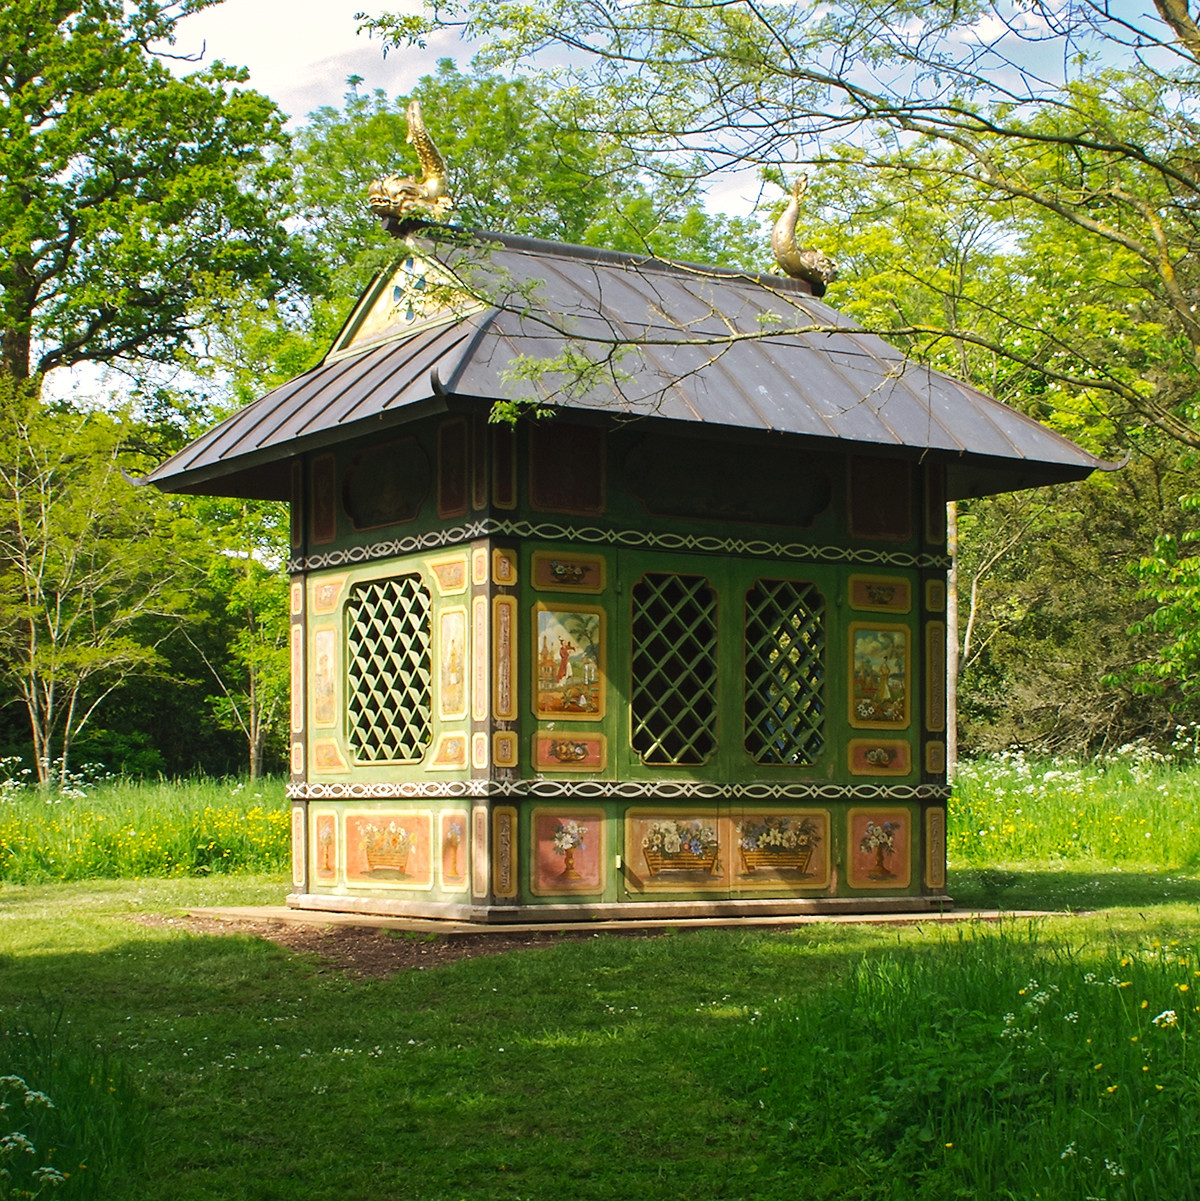 Chinese House, Stowe Landscaped Gardens, Buckinghamshire, England